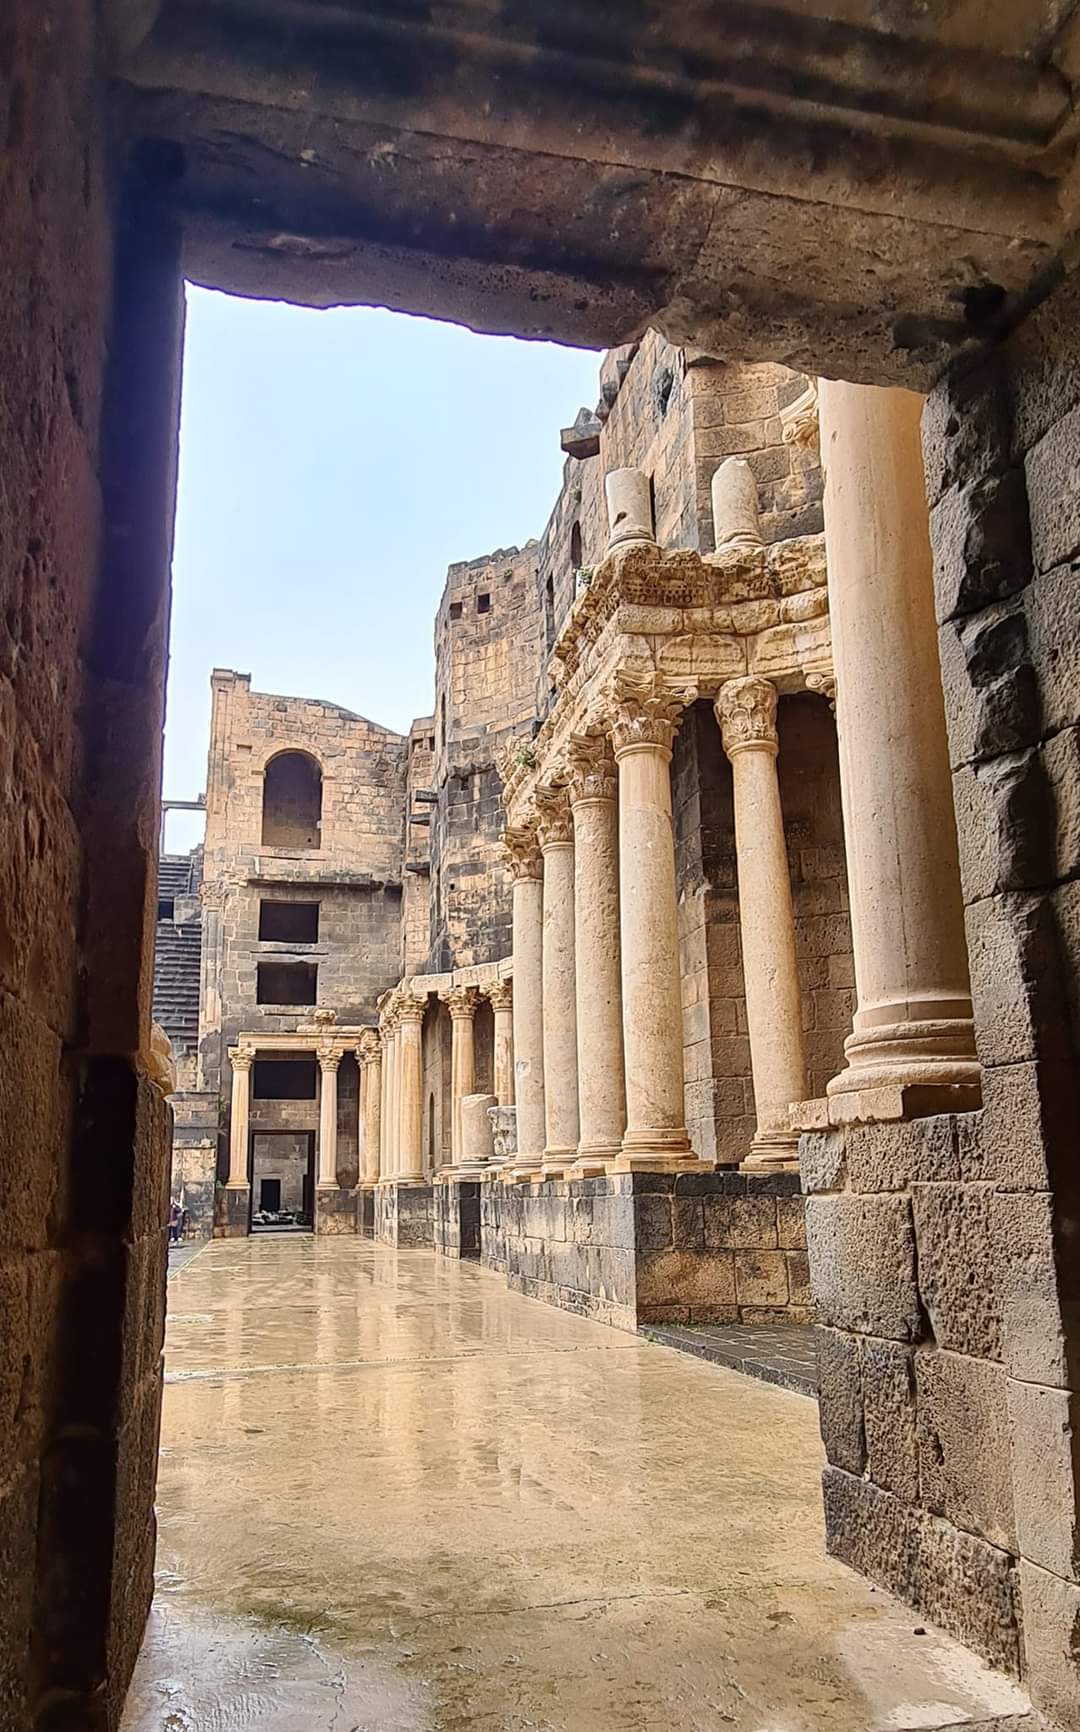 The stage of Bosra amphitheatre, Syria